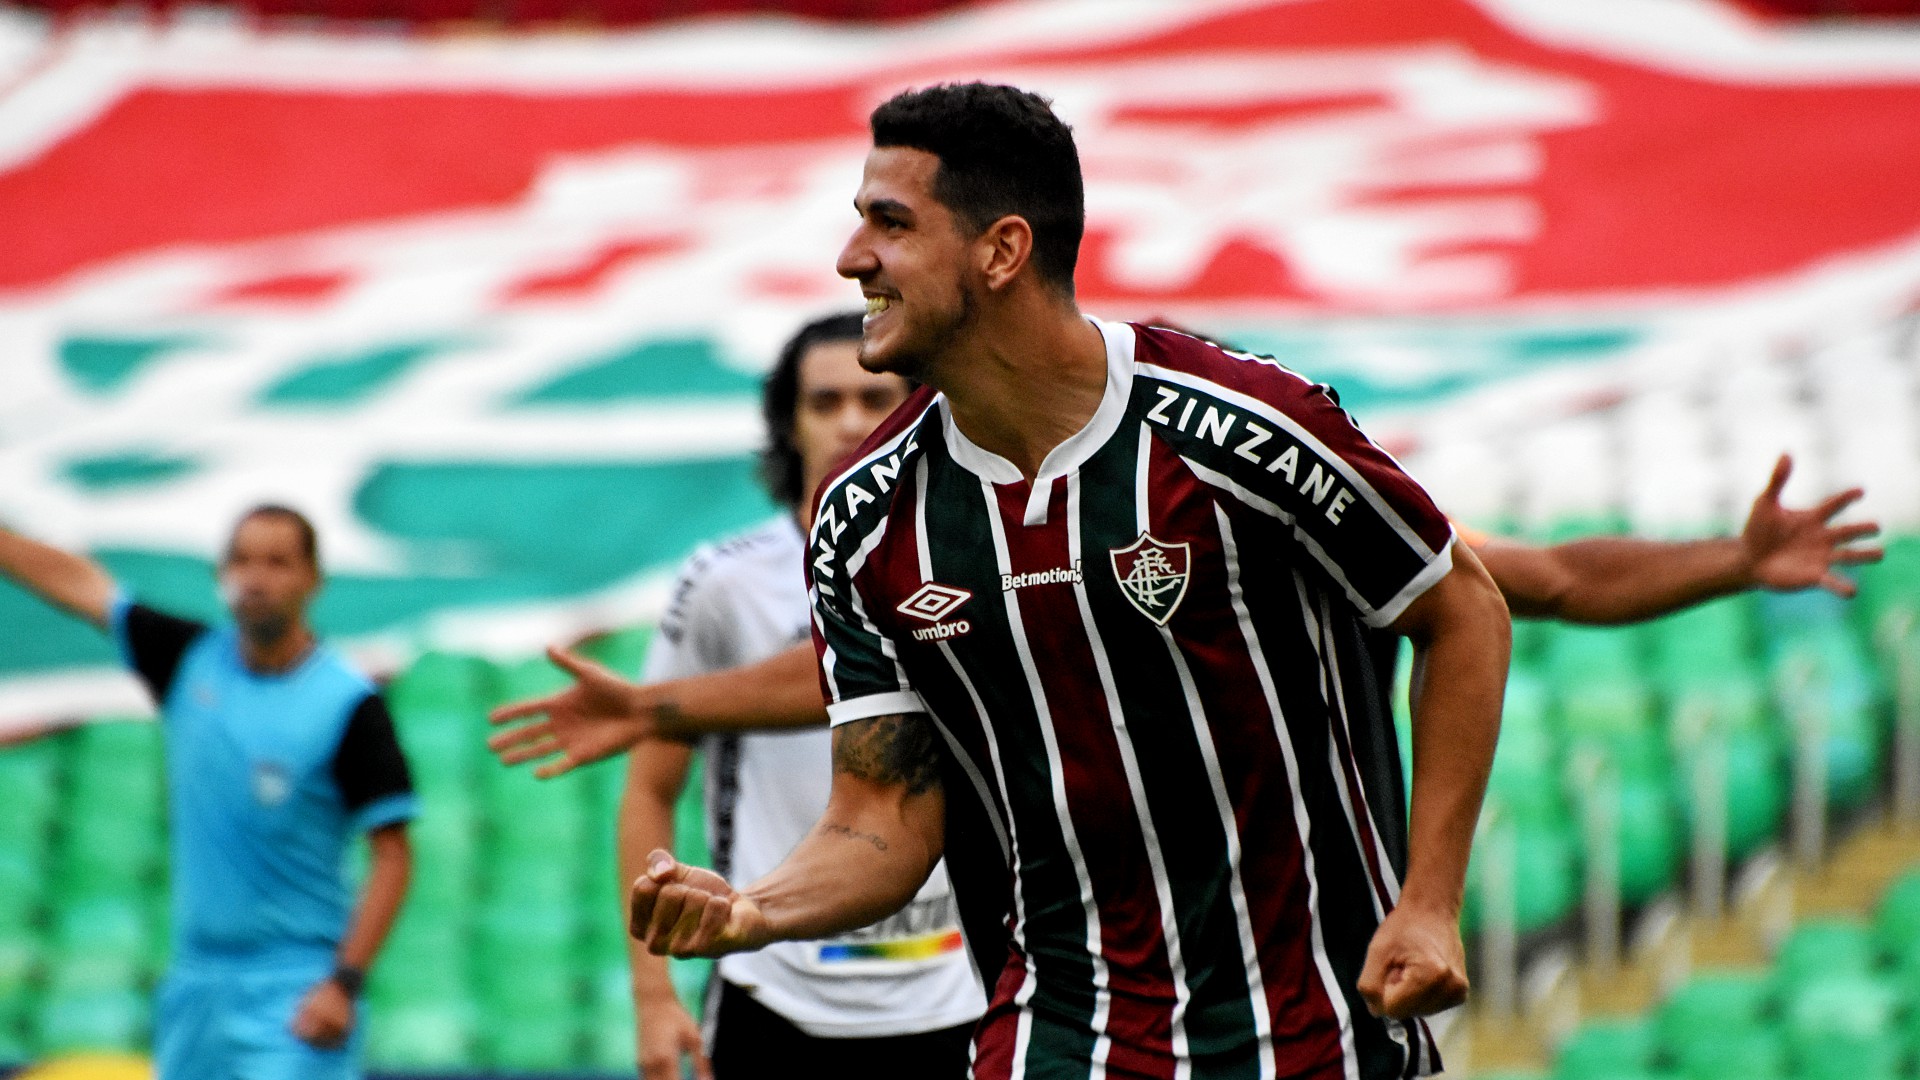 10 - Fluminense (BRA) - 48,7 milhões de euros - Mailson Santana/Fluminense FC